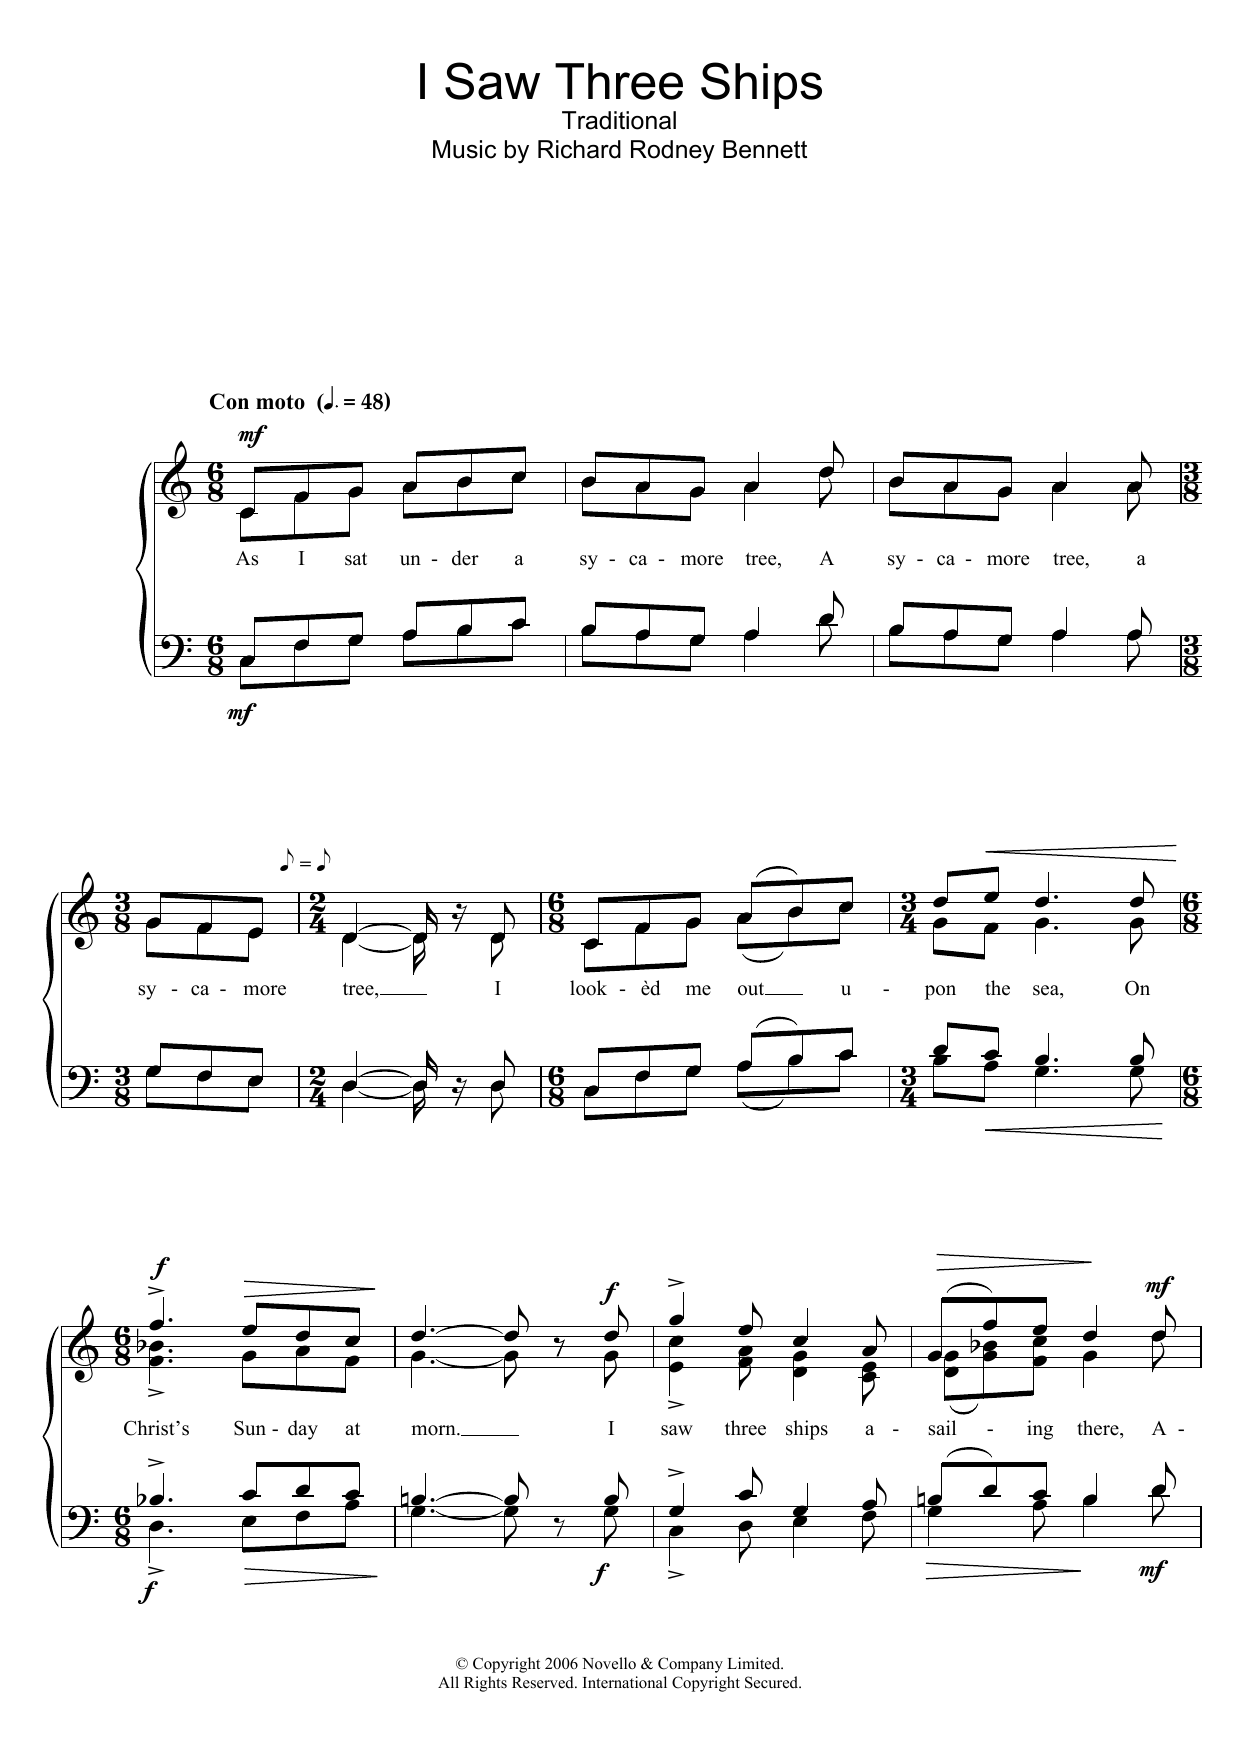 Richard Rodney Bennett I Saw Three Ships Sheet Music Notes & Chords for SATB Choir - Download or Print PDF